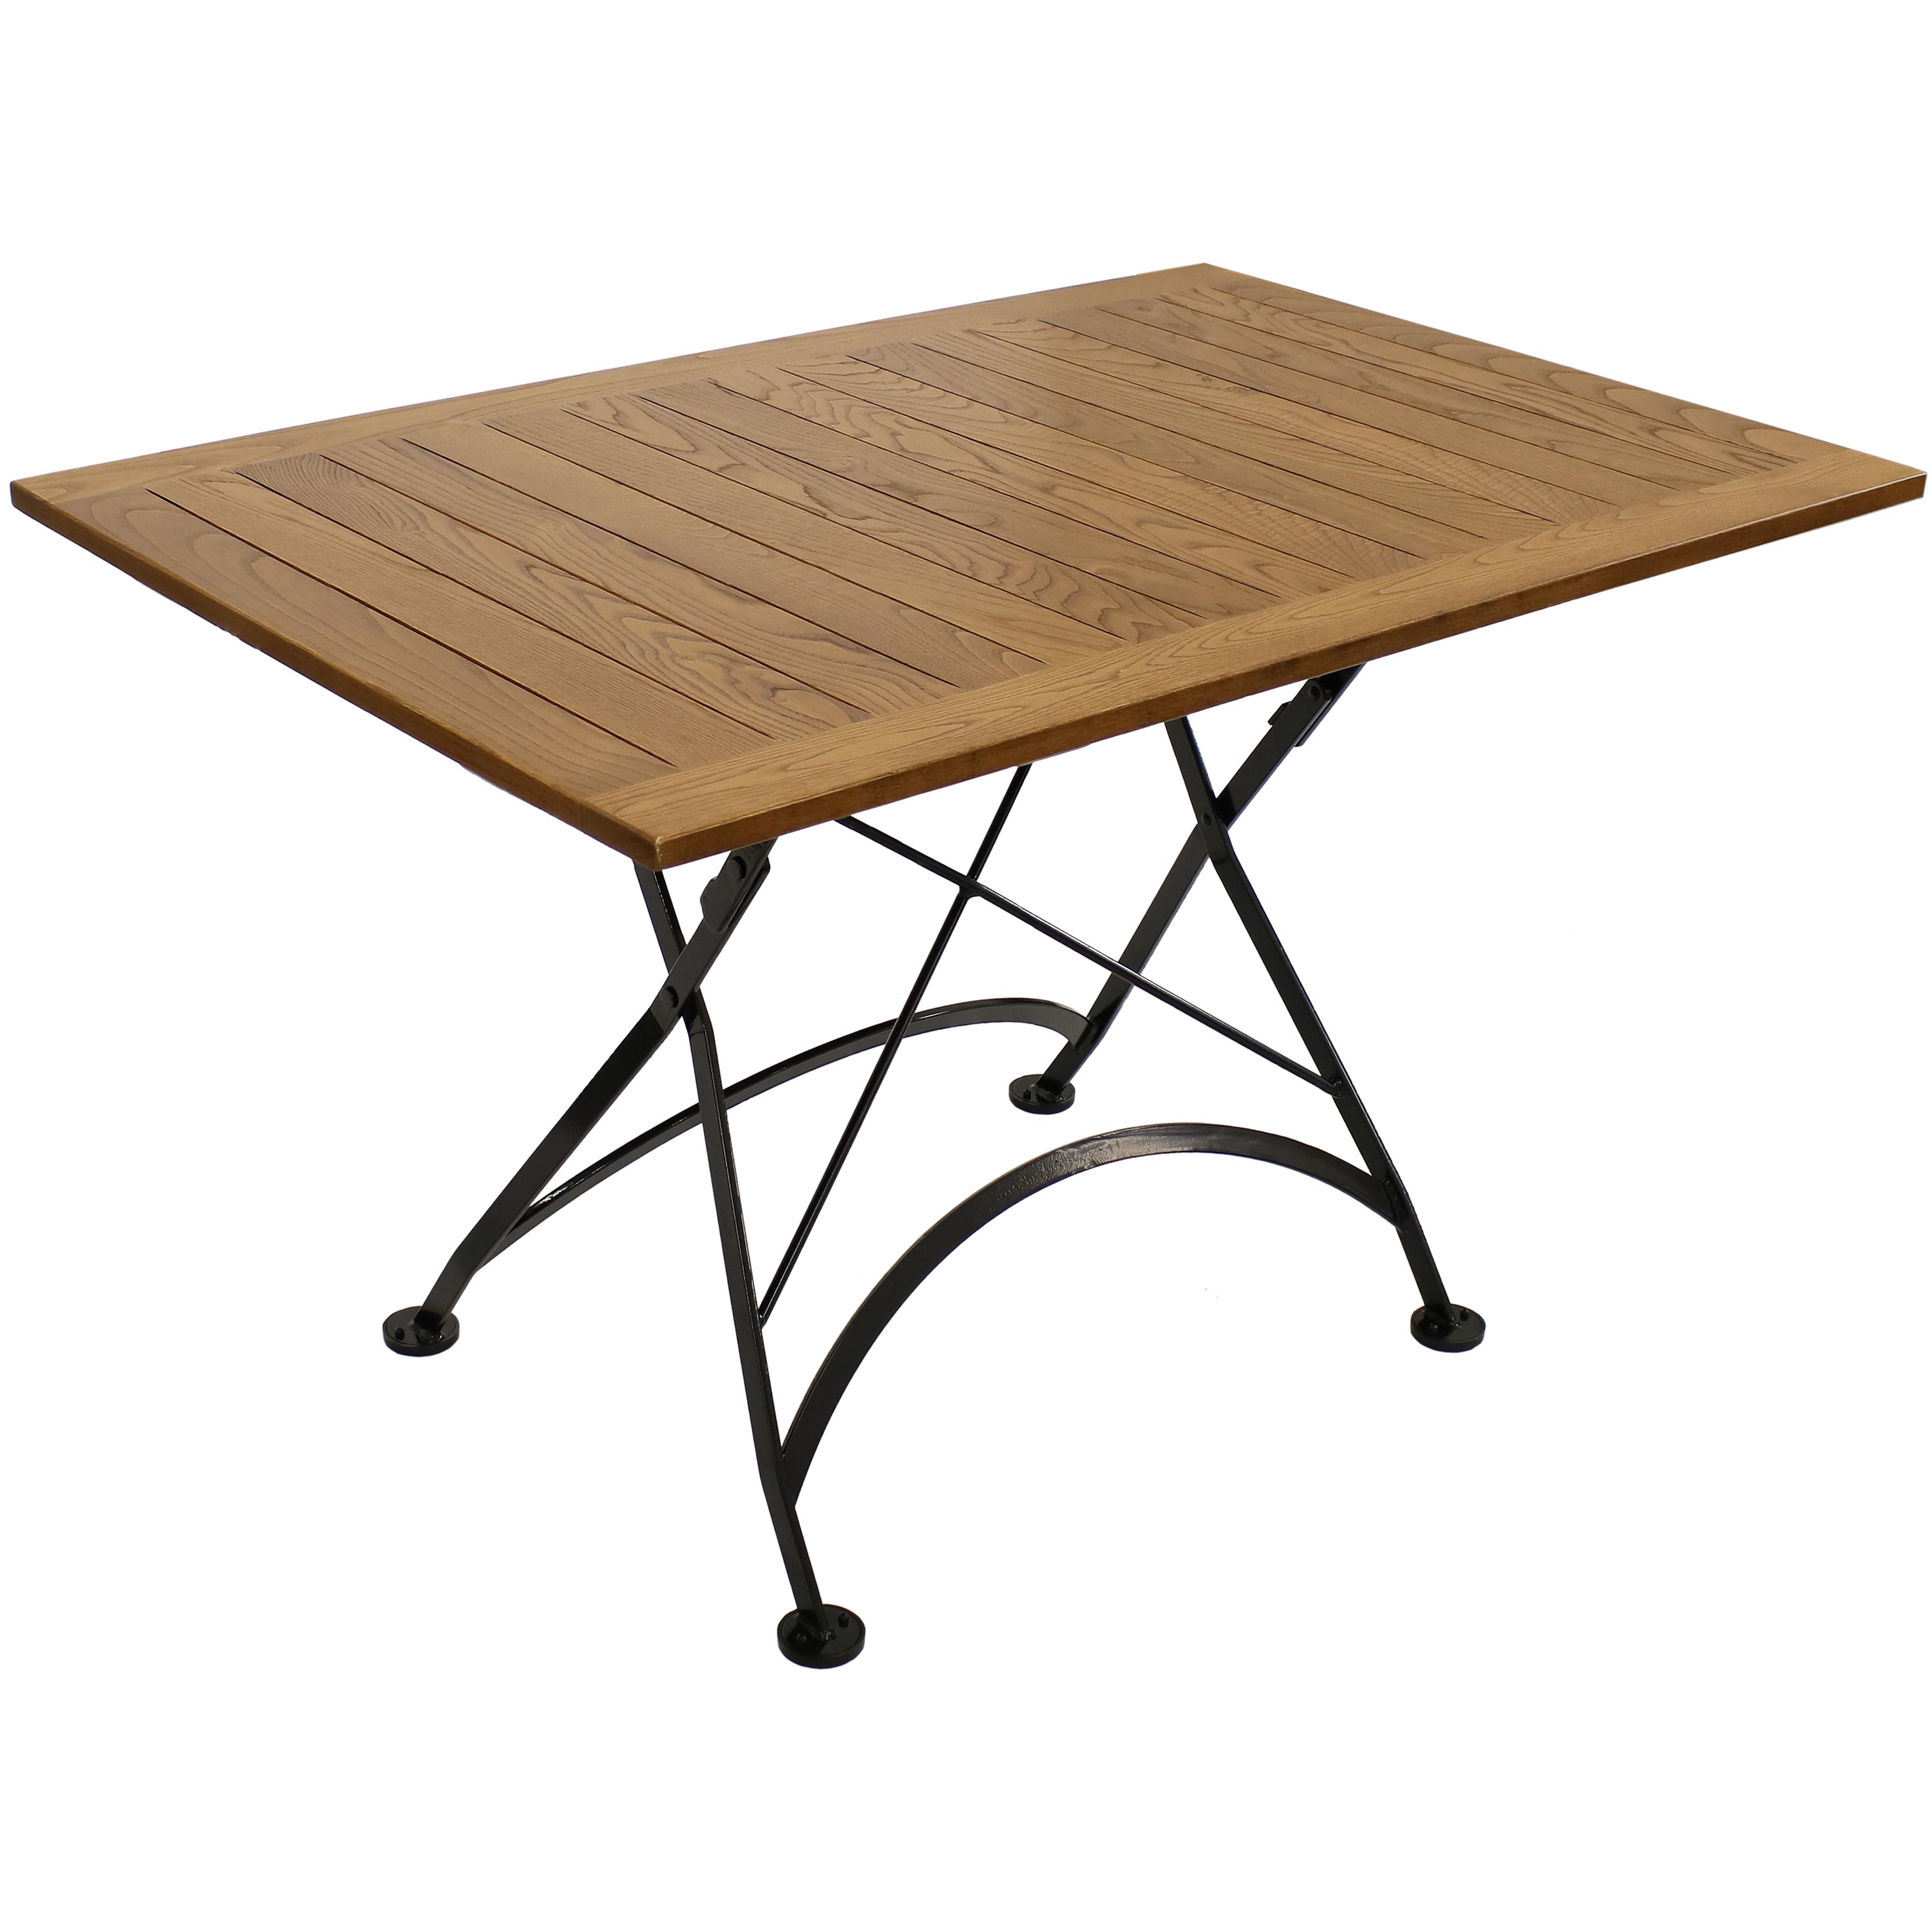 Sunnydaze European Chestnut Wood Folding Dining Table